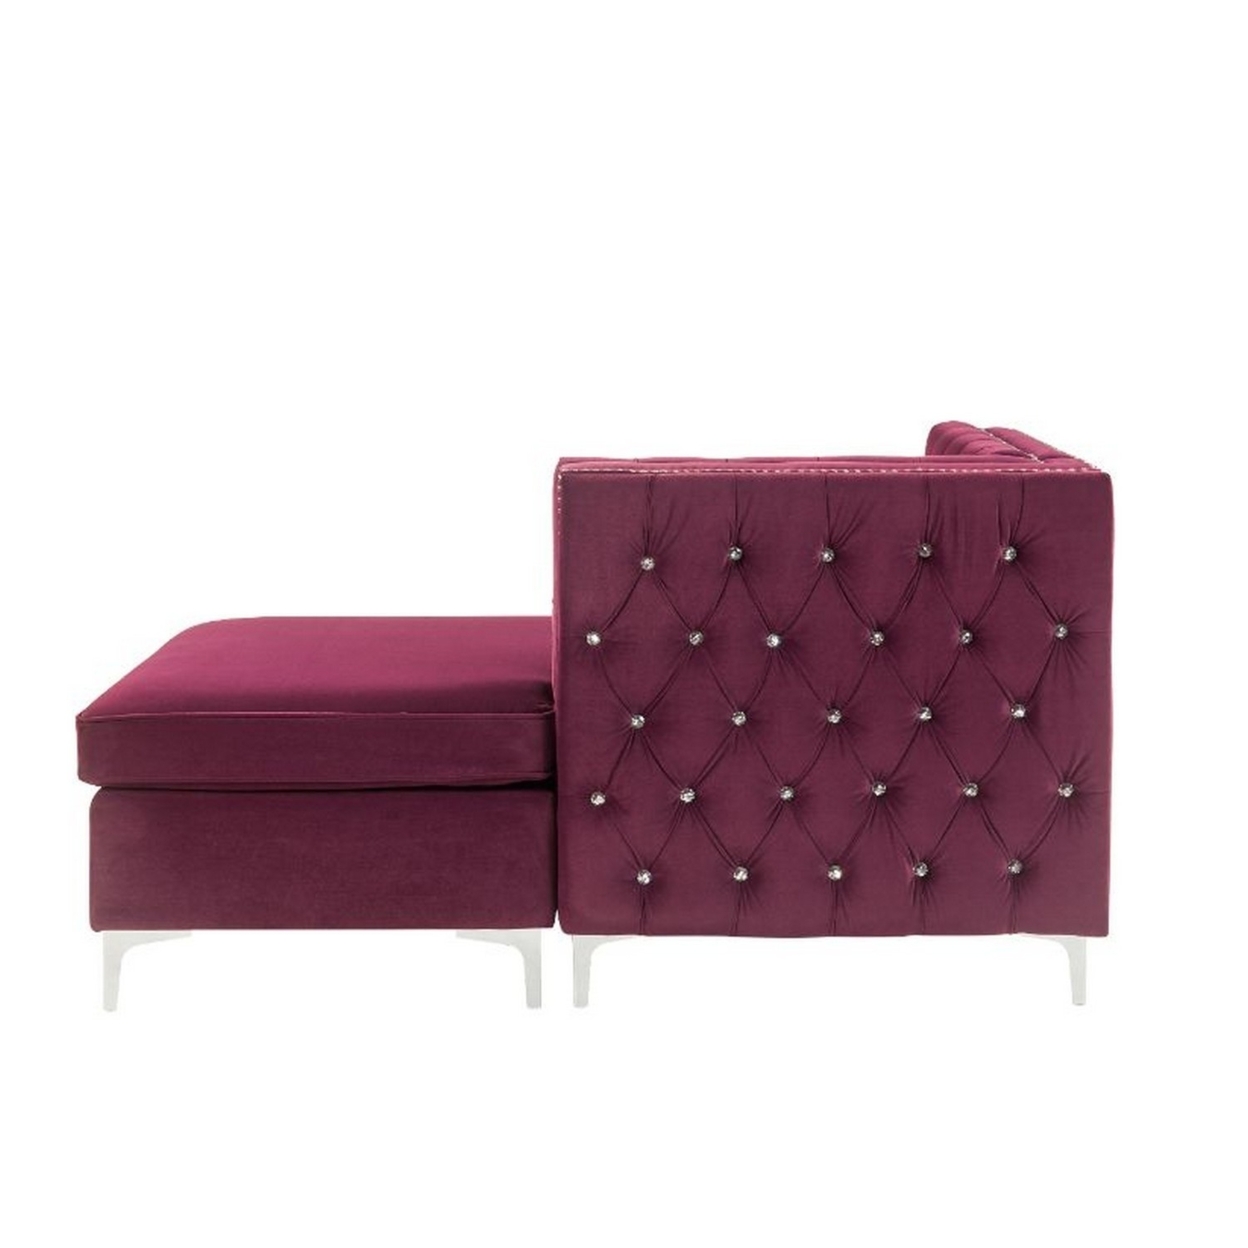 Chaise With Velvet Upholstery And Metal Legs, Red- Saltoro Sherpi